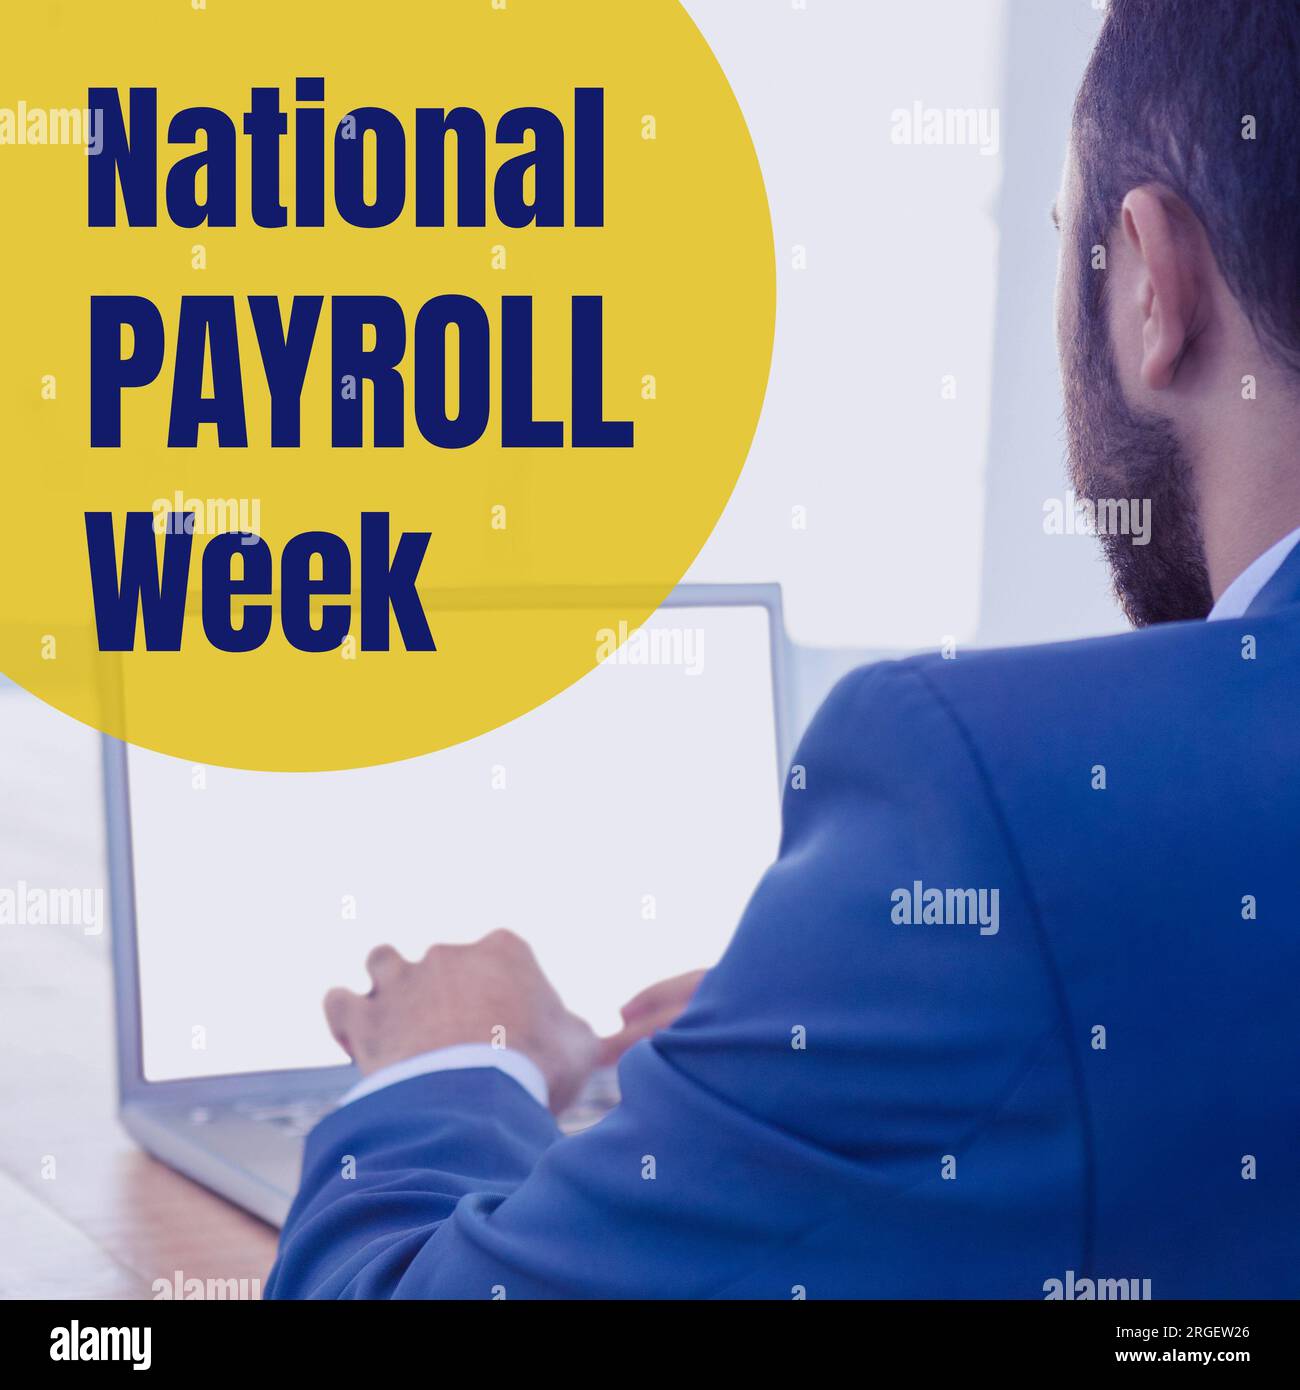 National payroll week text on yellow over biracial businessman using laptop Stock Photo